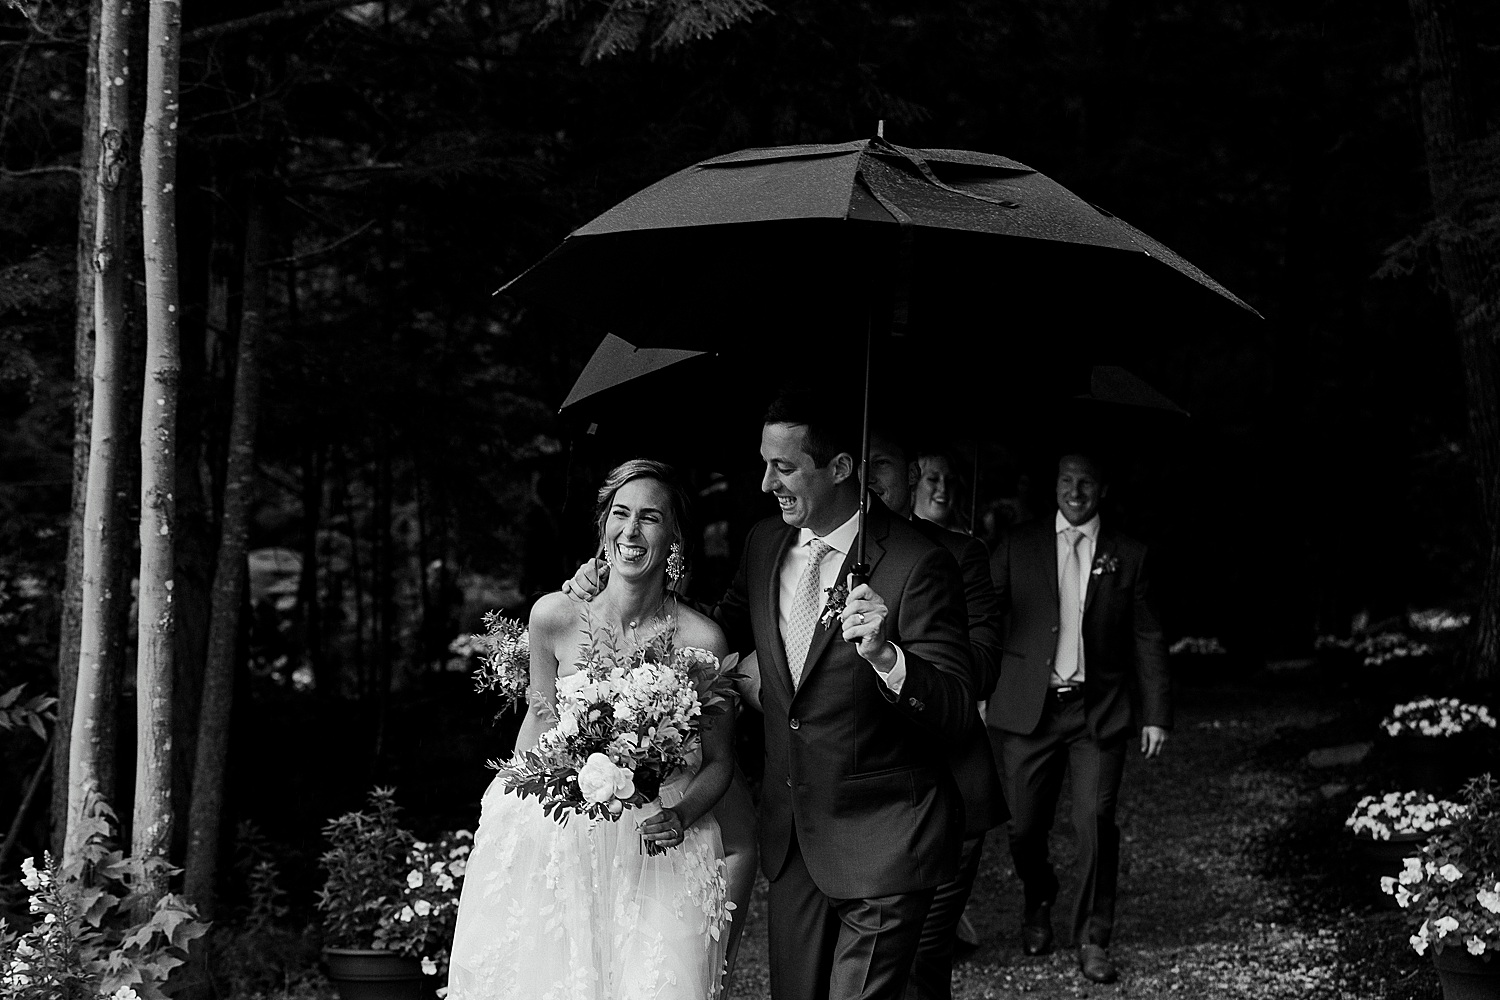 Bride and groom smiling under umbrellas at Maine wedding